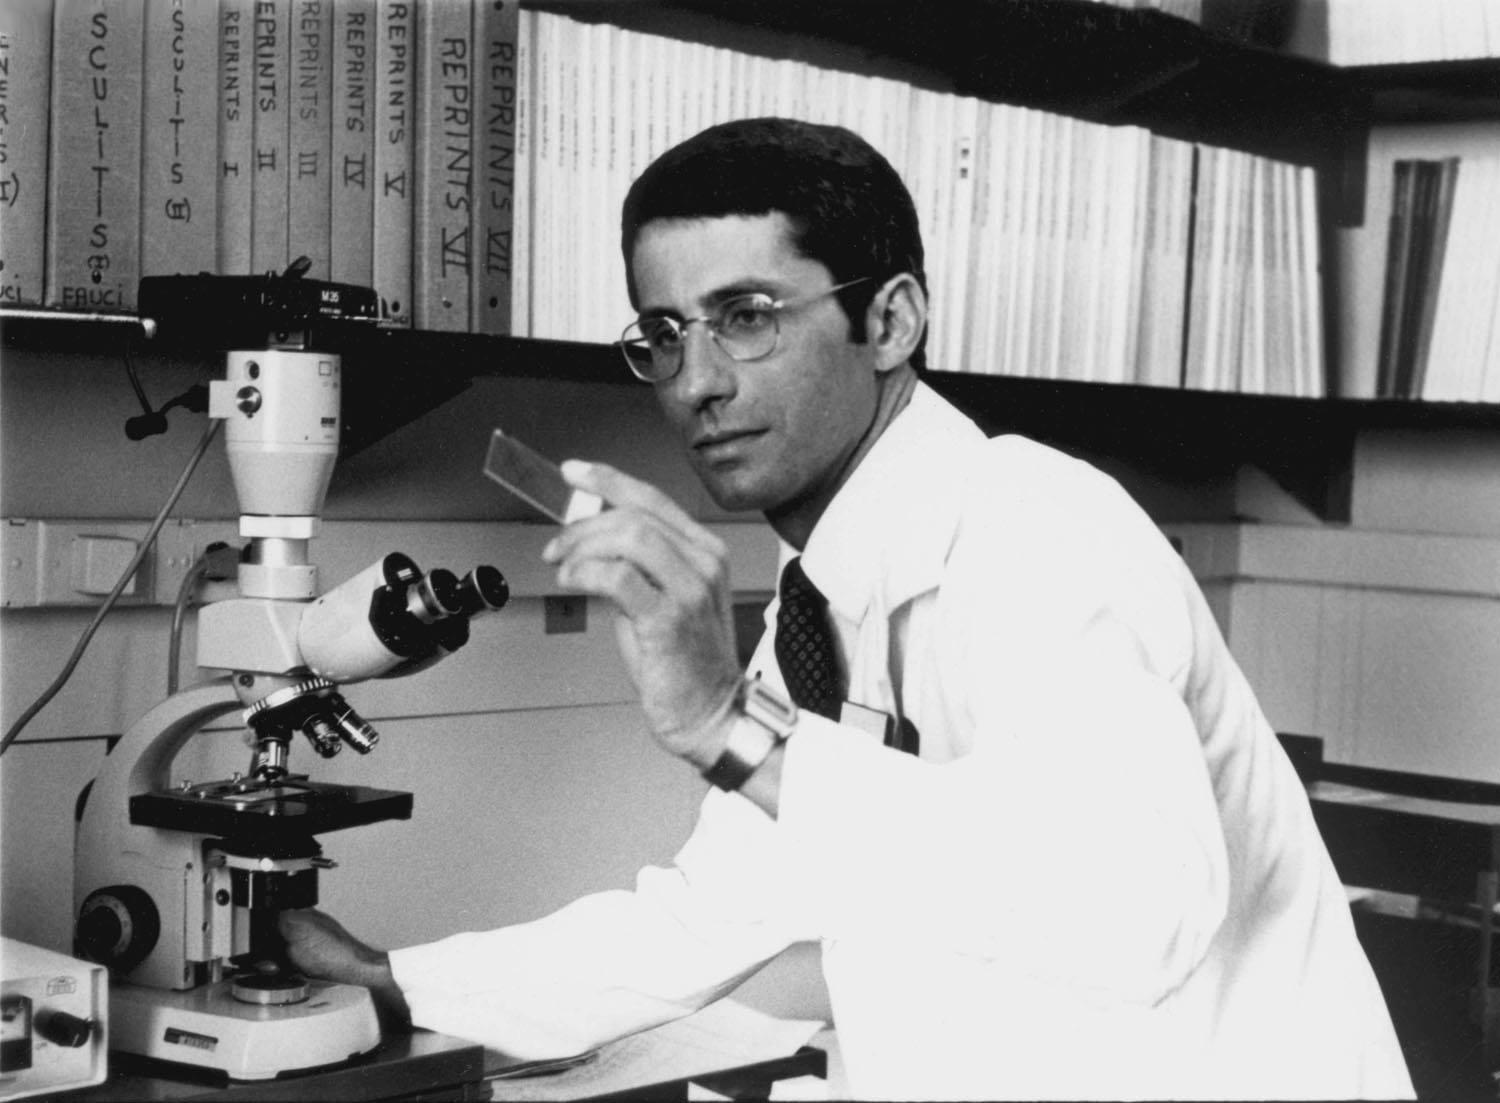 Dr. Anthony Fauci, circa 1985